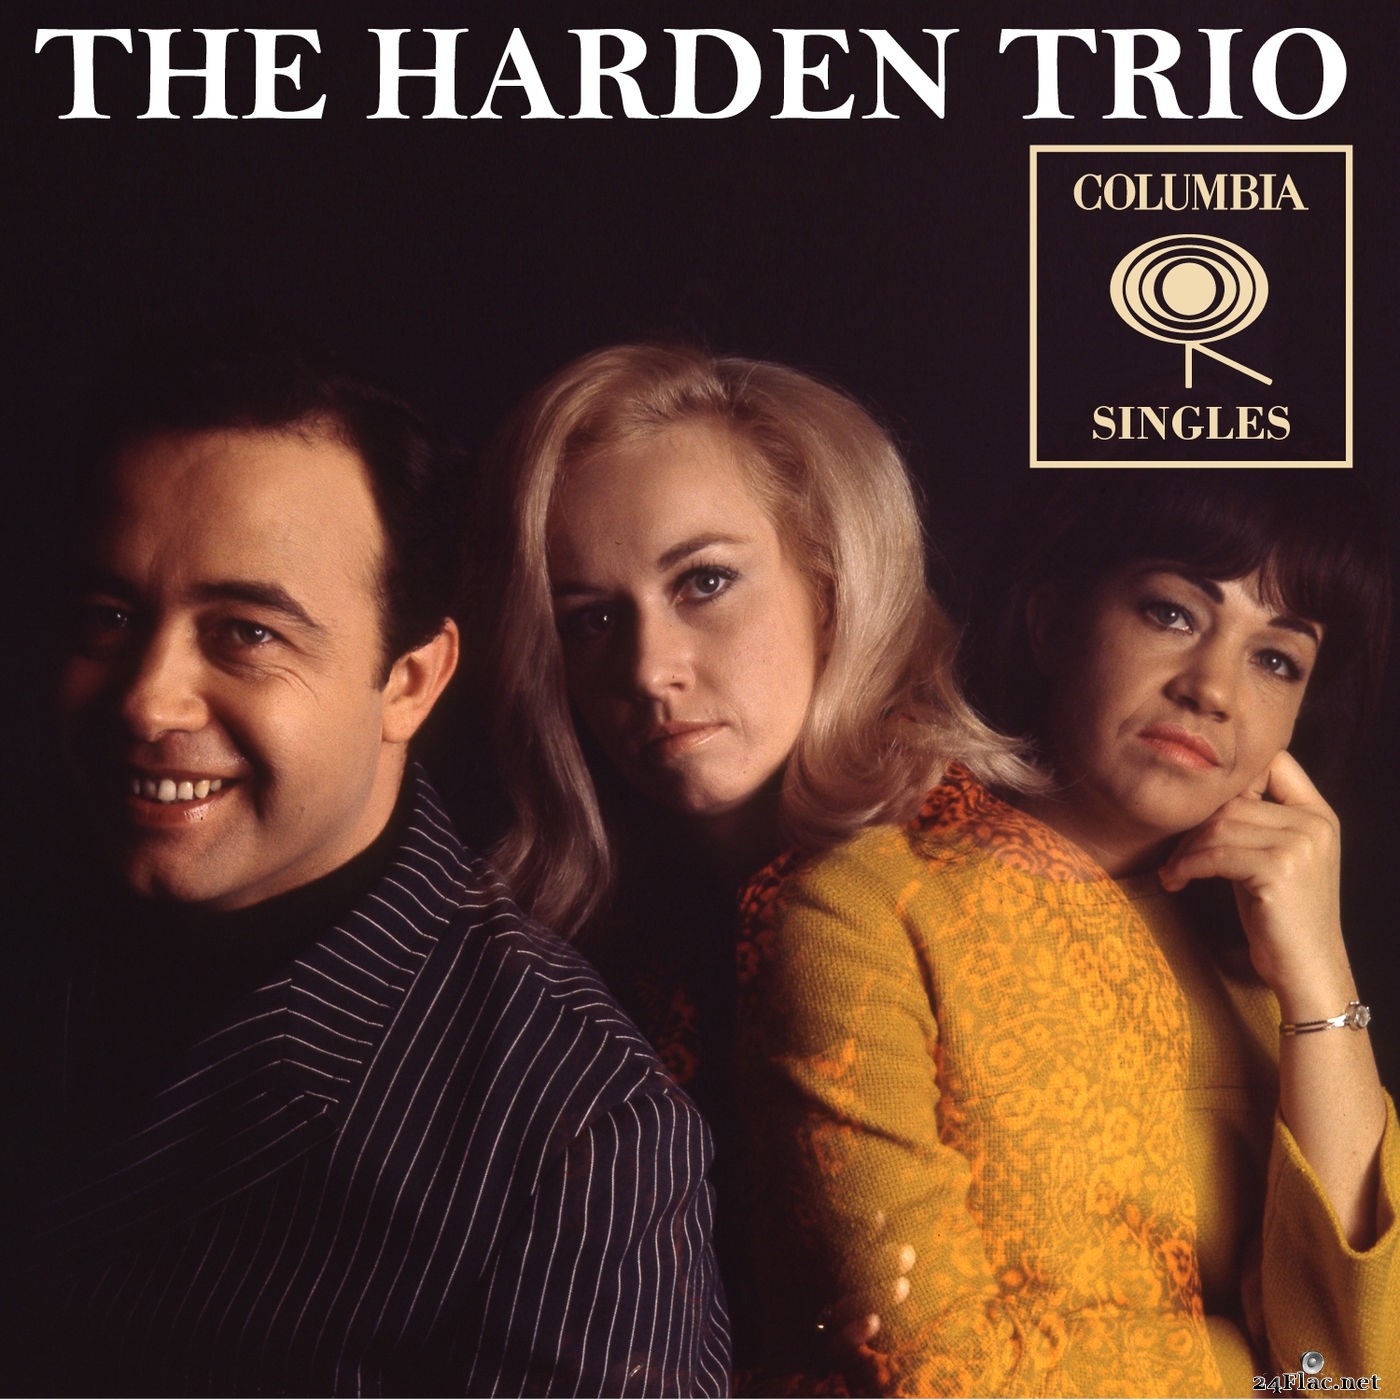 The Harden Trio - Columbia Singles (2018) FLAC + Hi-Res